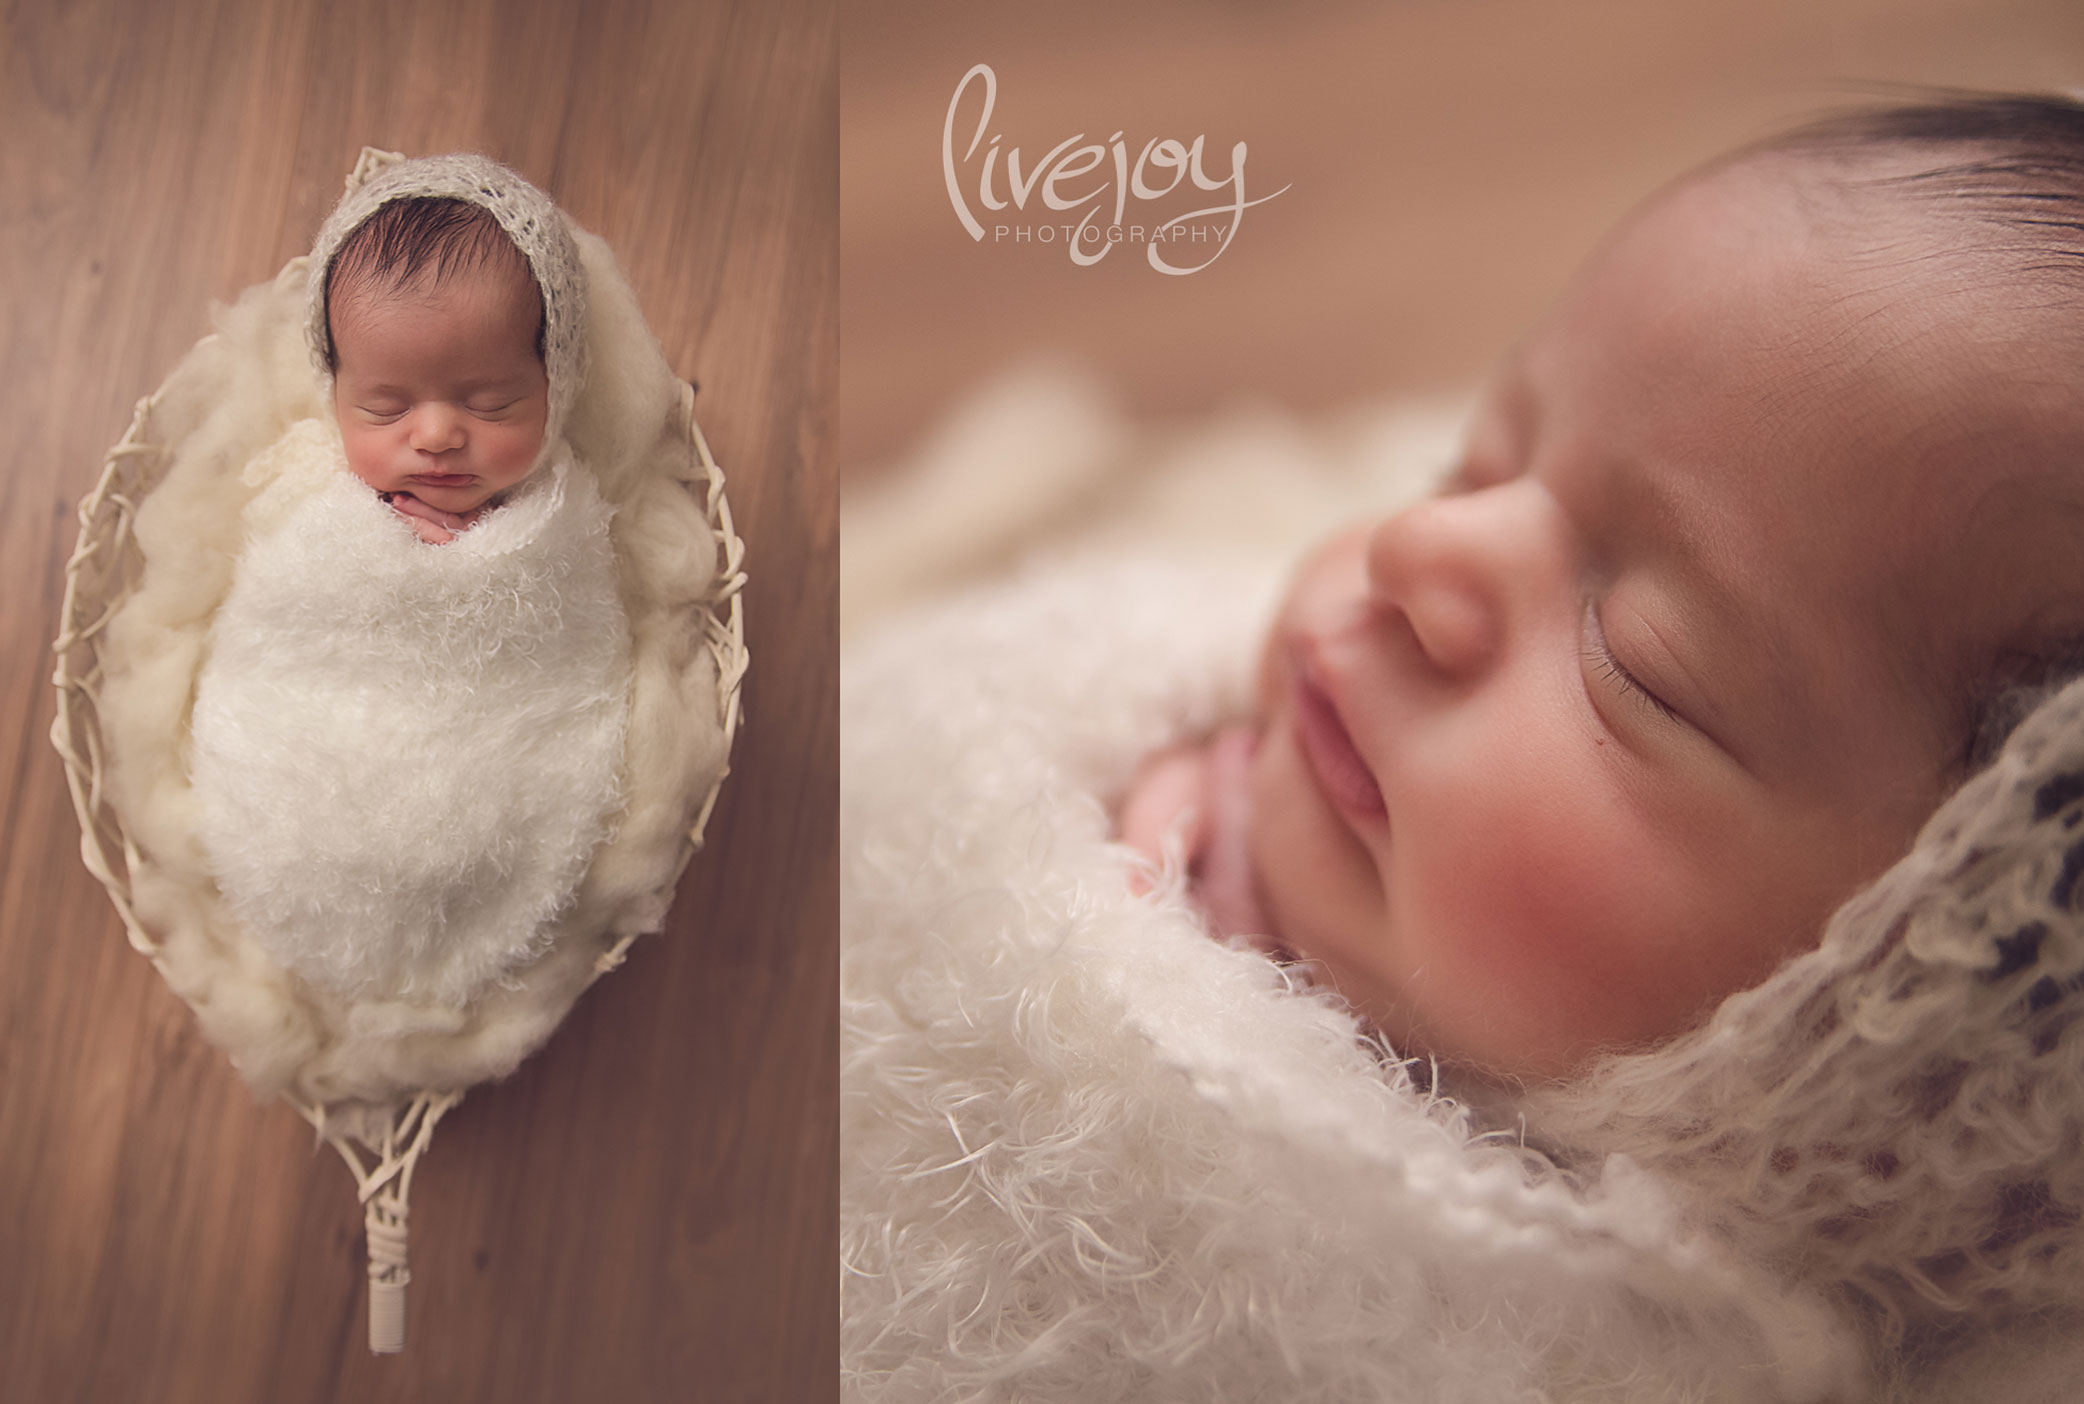 Newborn Photography - LiveJoy Photography - Oregon